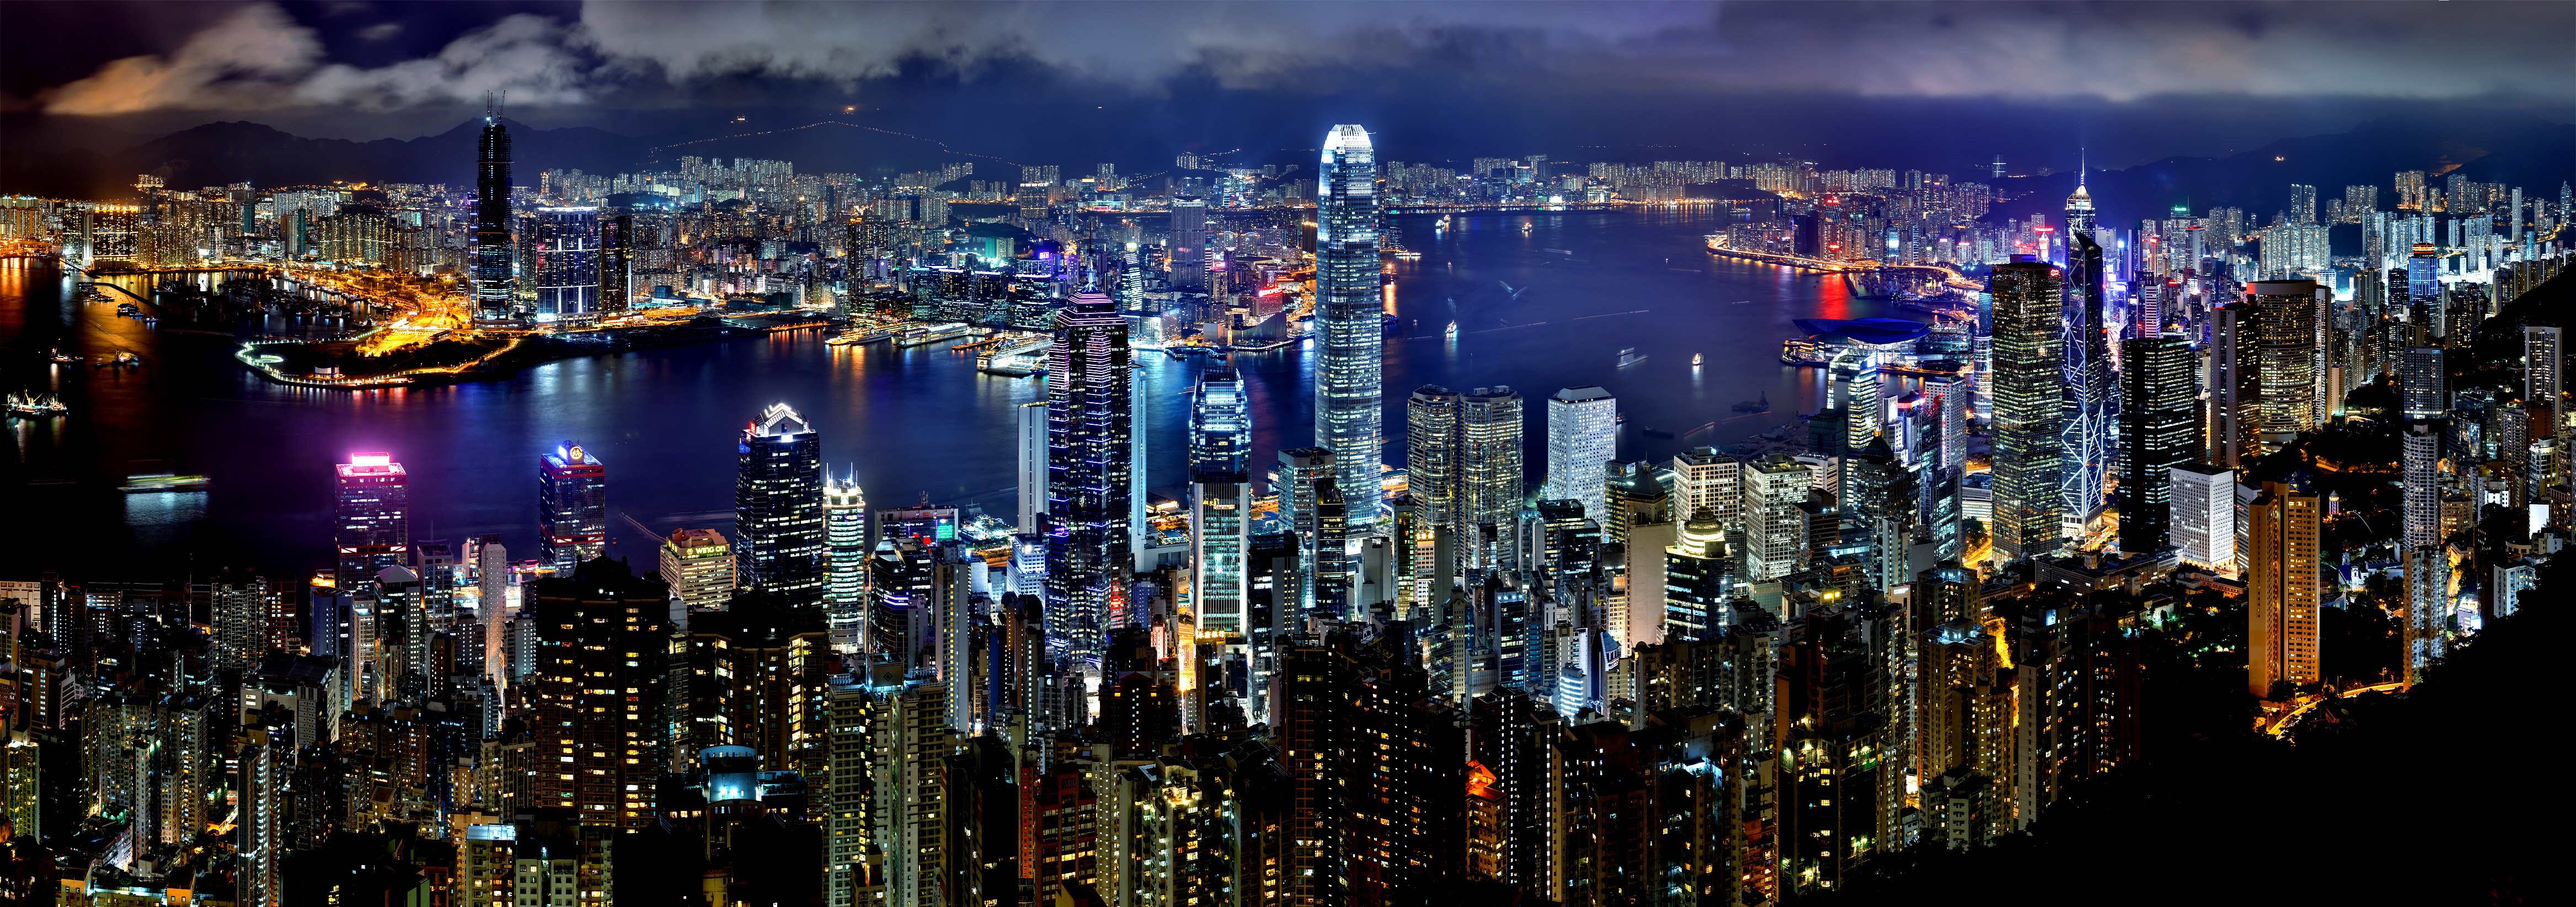 Hong_Kong_Night_Skyline2.jpg